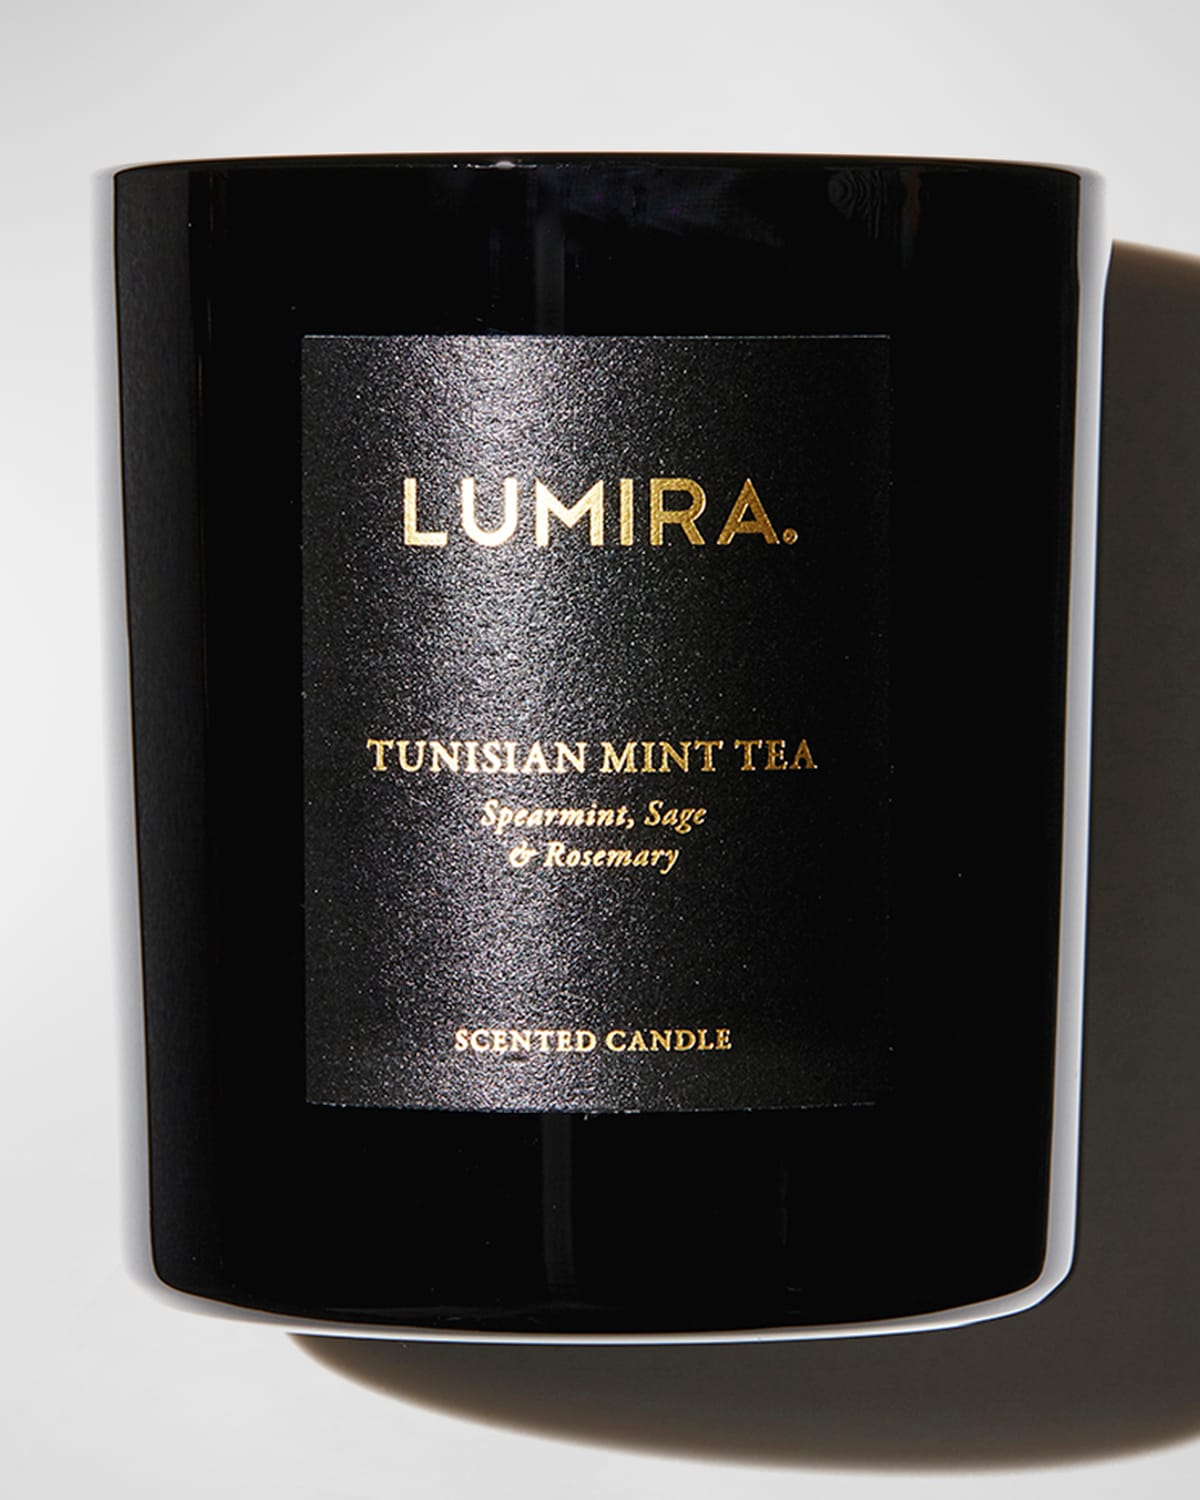 Lumira 10.6 Oz. Tunisian Mint Tea Scented Candle In Black